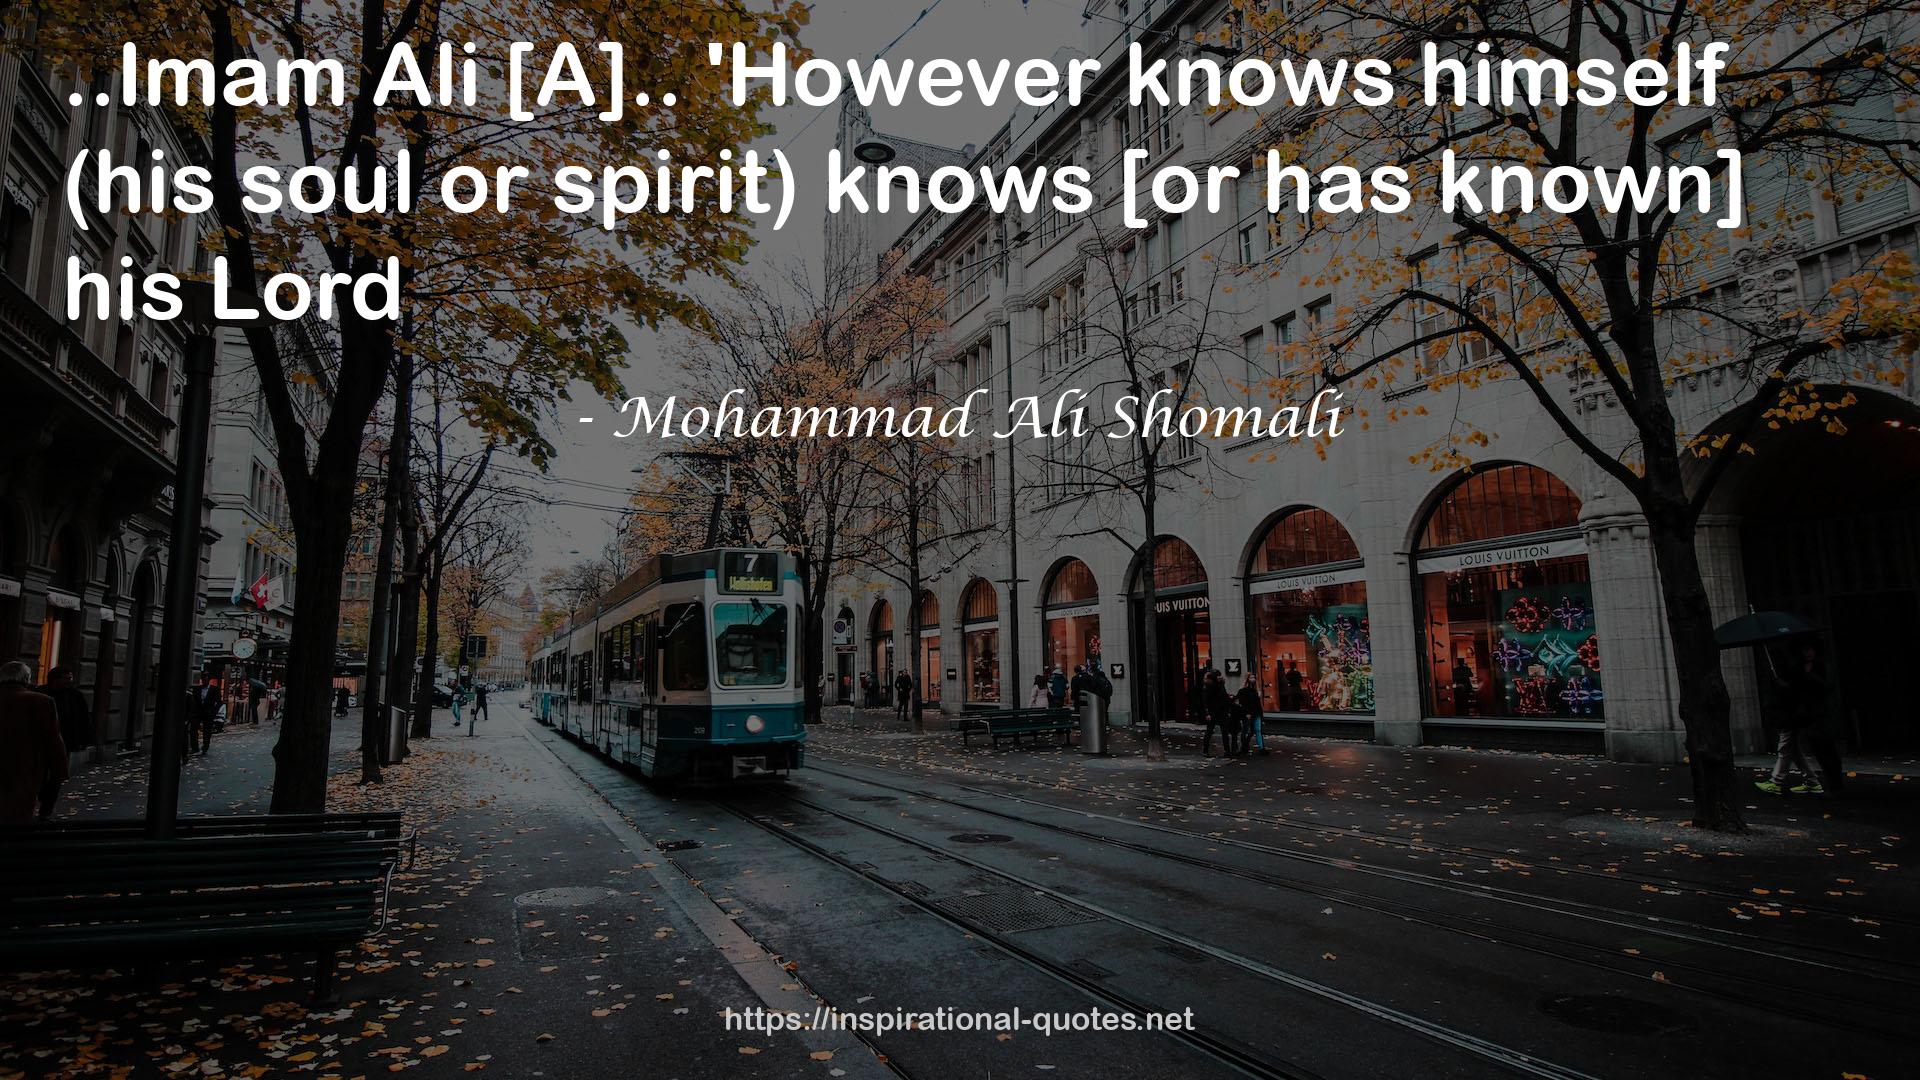 Mohammad Ali Shomali QUOTES